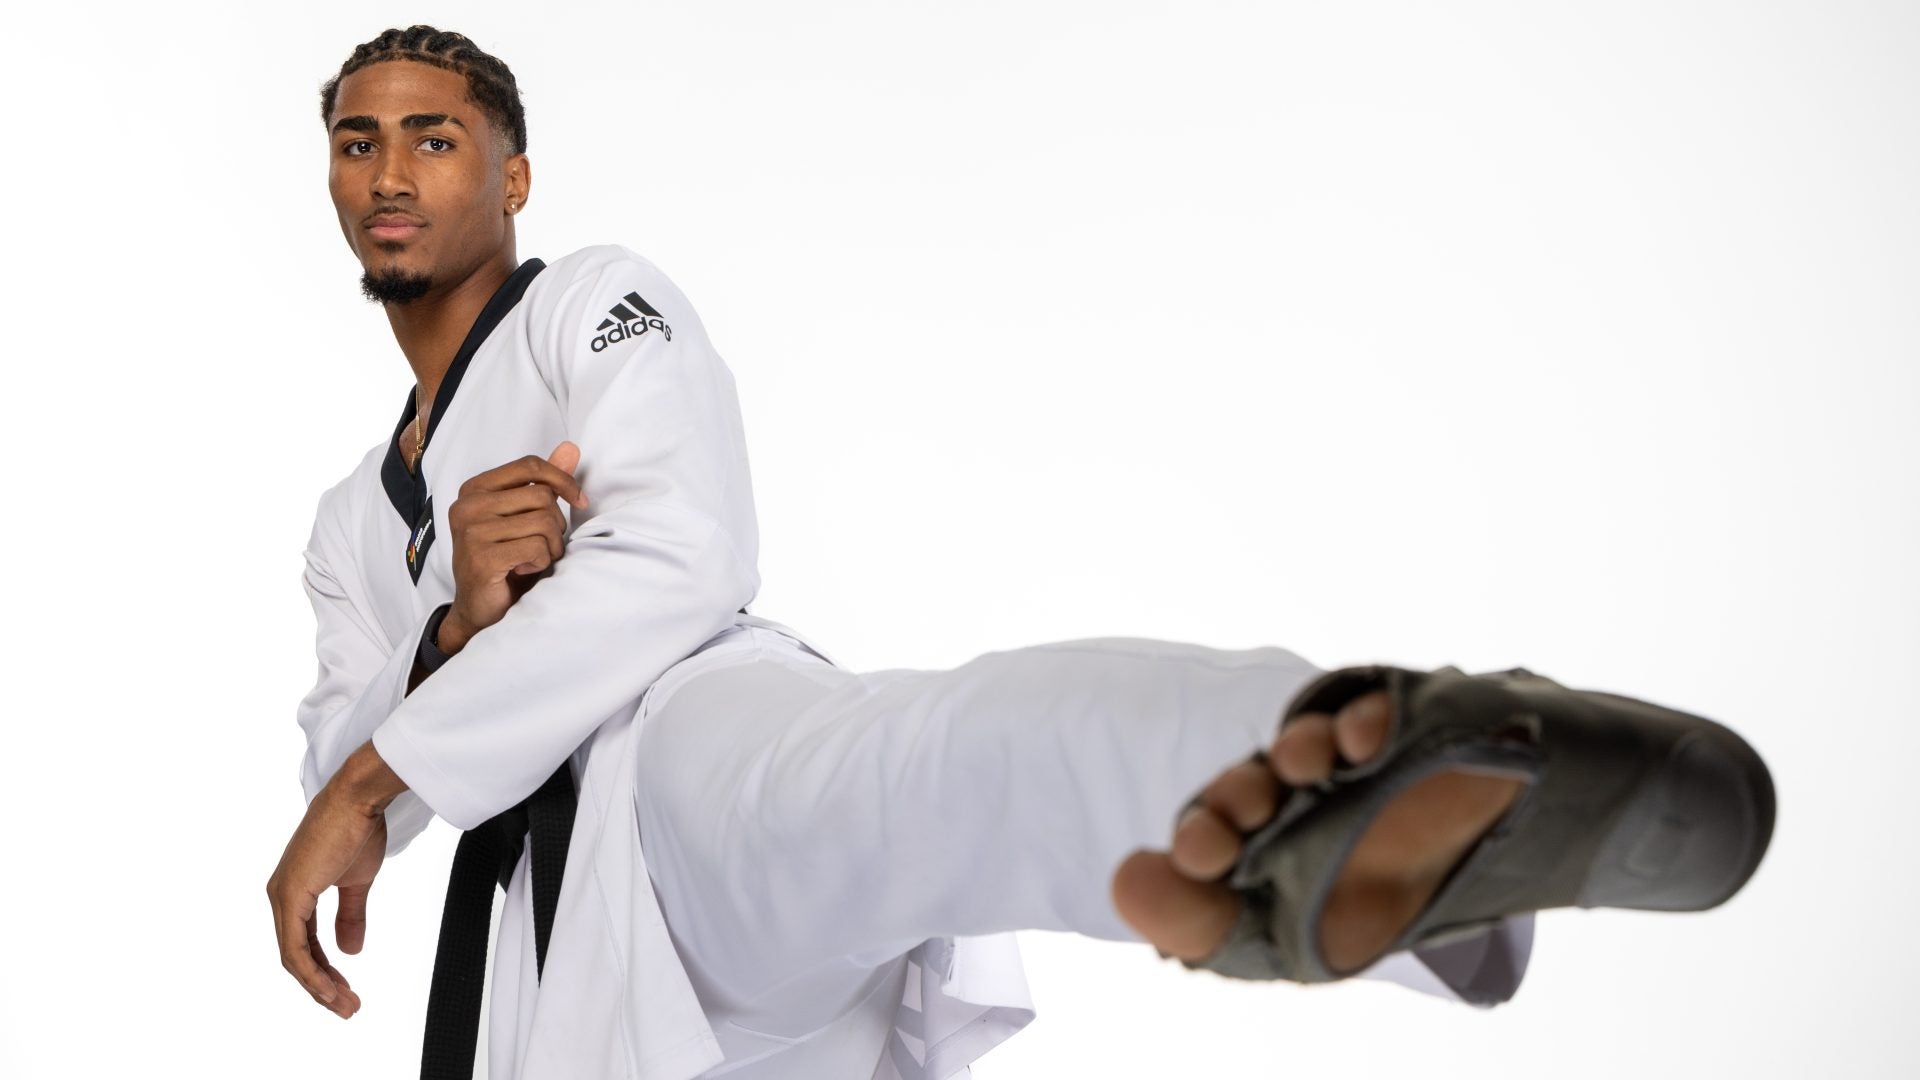 Meet C.J. Nickolas, U.S. Taekwondo Contender Going For Gold At The 2024 Paris Olympics